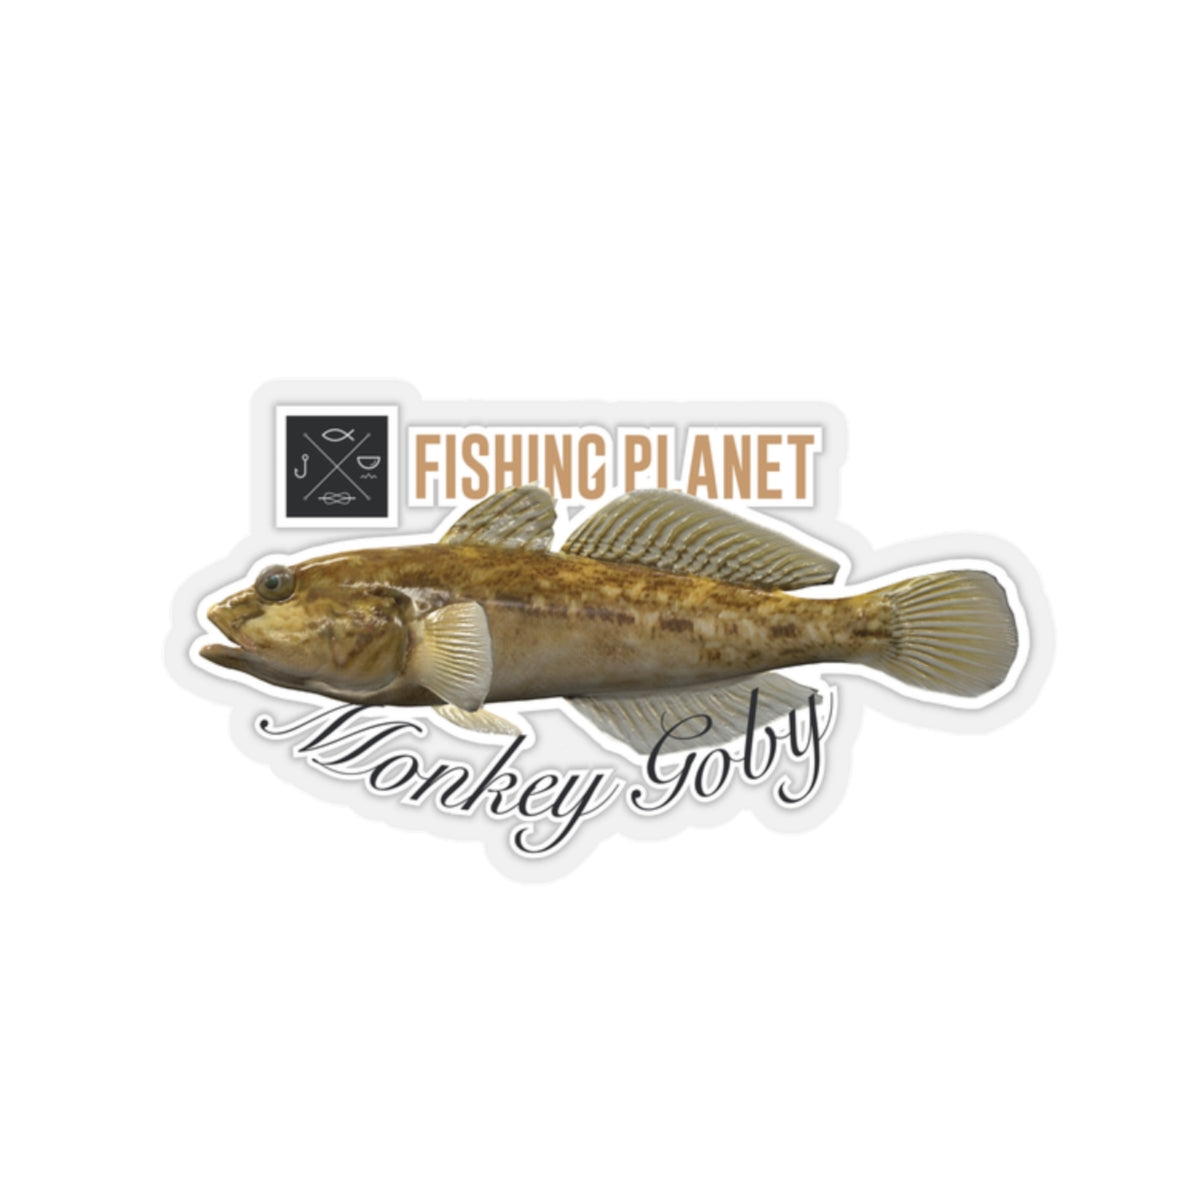 Fishing Planet +Monkey Goby Sticker (US shipping)